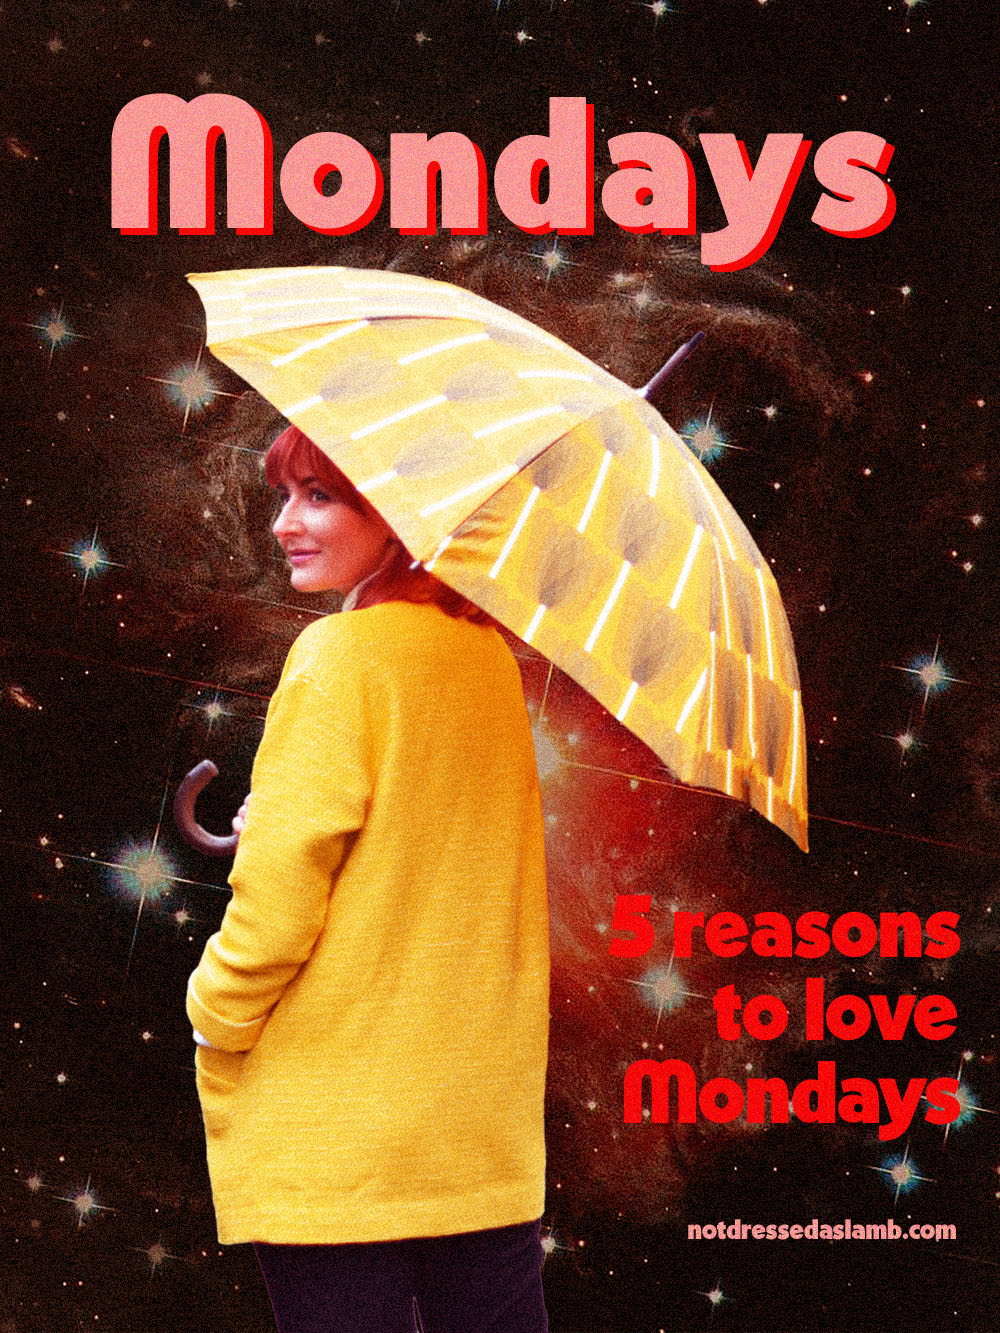 I Don't Like Mondays, I Love Them! 5 Reasons to Love Mondays | Not Dressed As Lamb, over 50 lifestyle blog